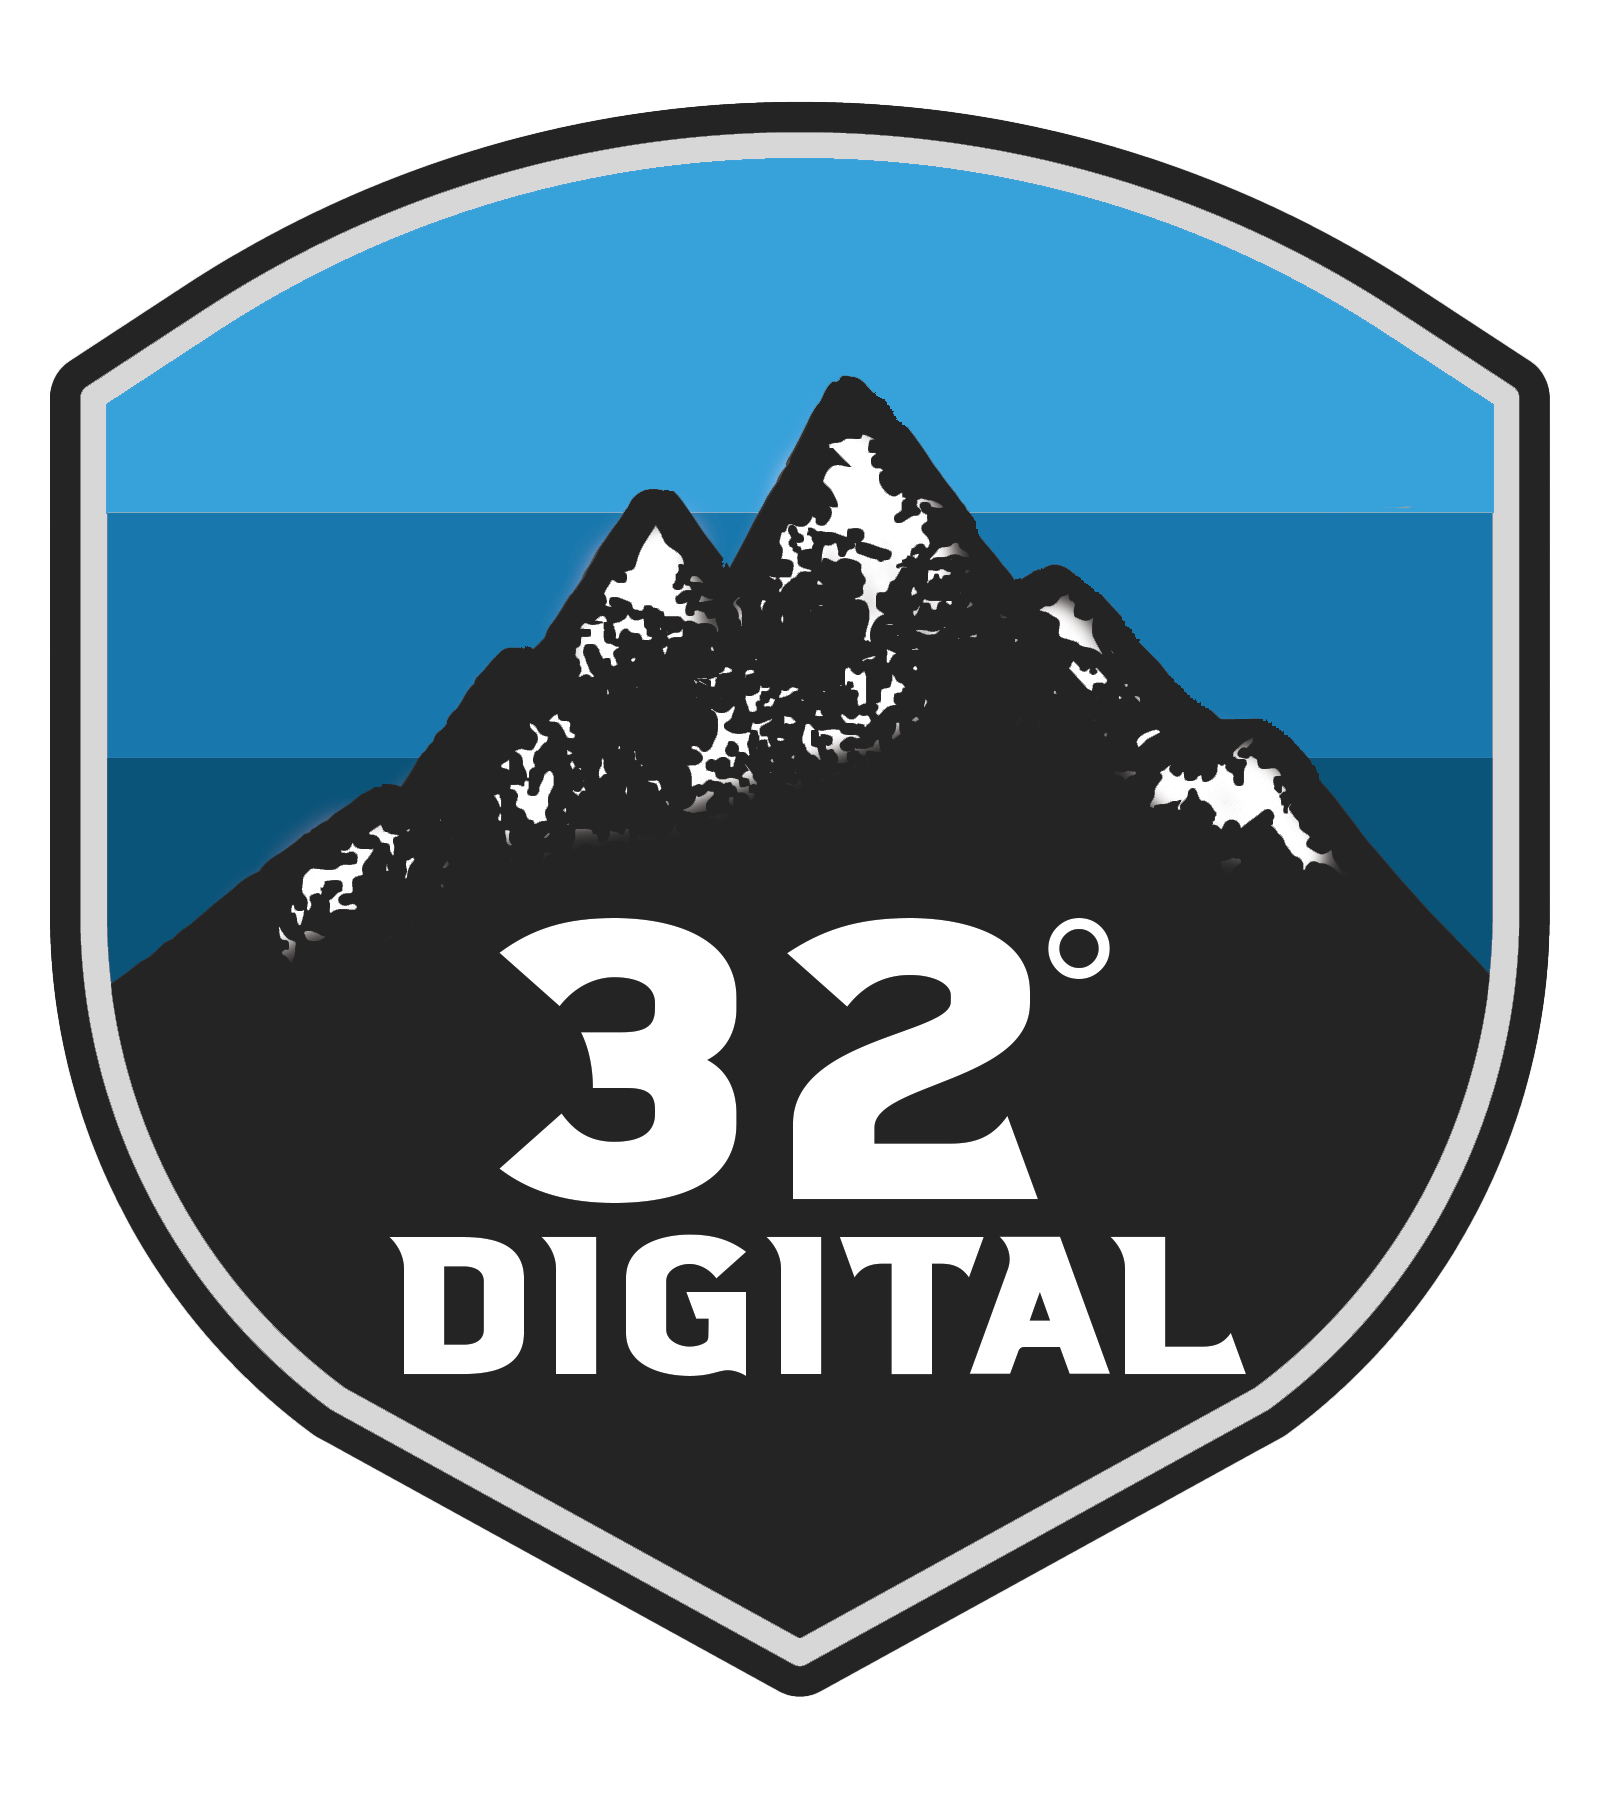 32 Degrees Digital logo